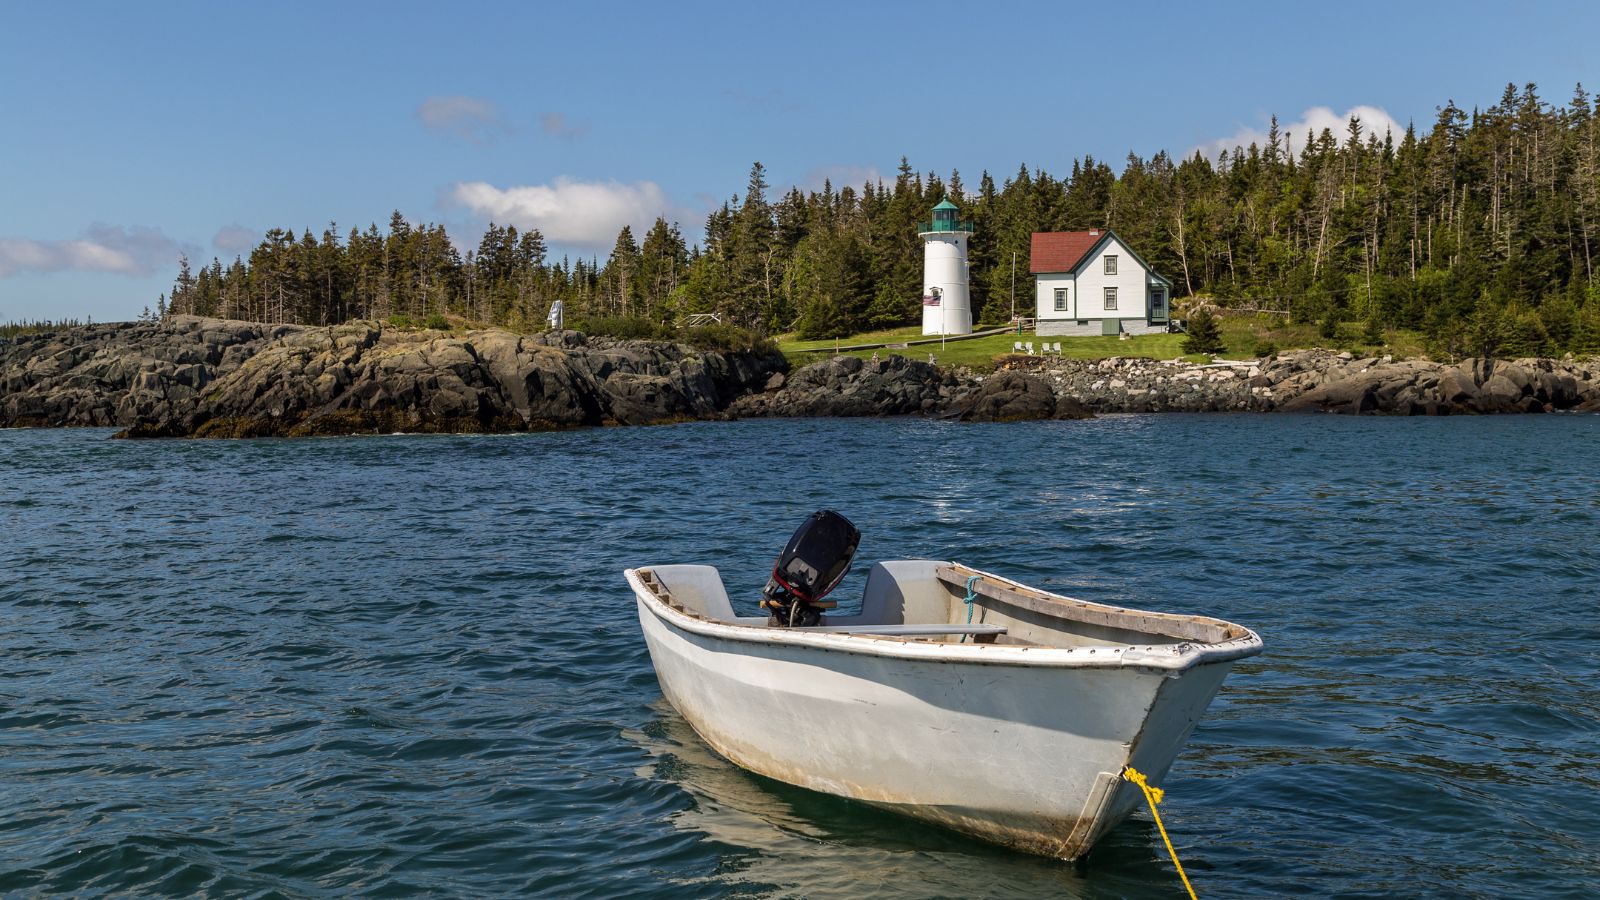 Little River Lighthouse in Cutler, Maine (Photo: Shutterstock)